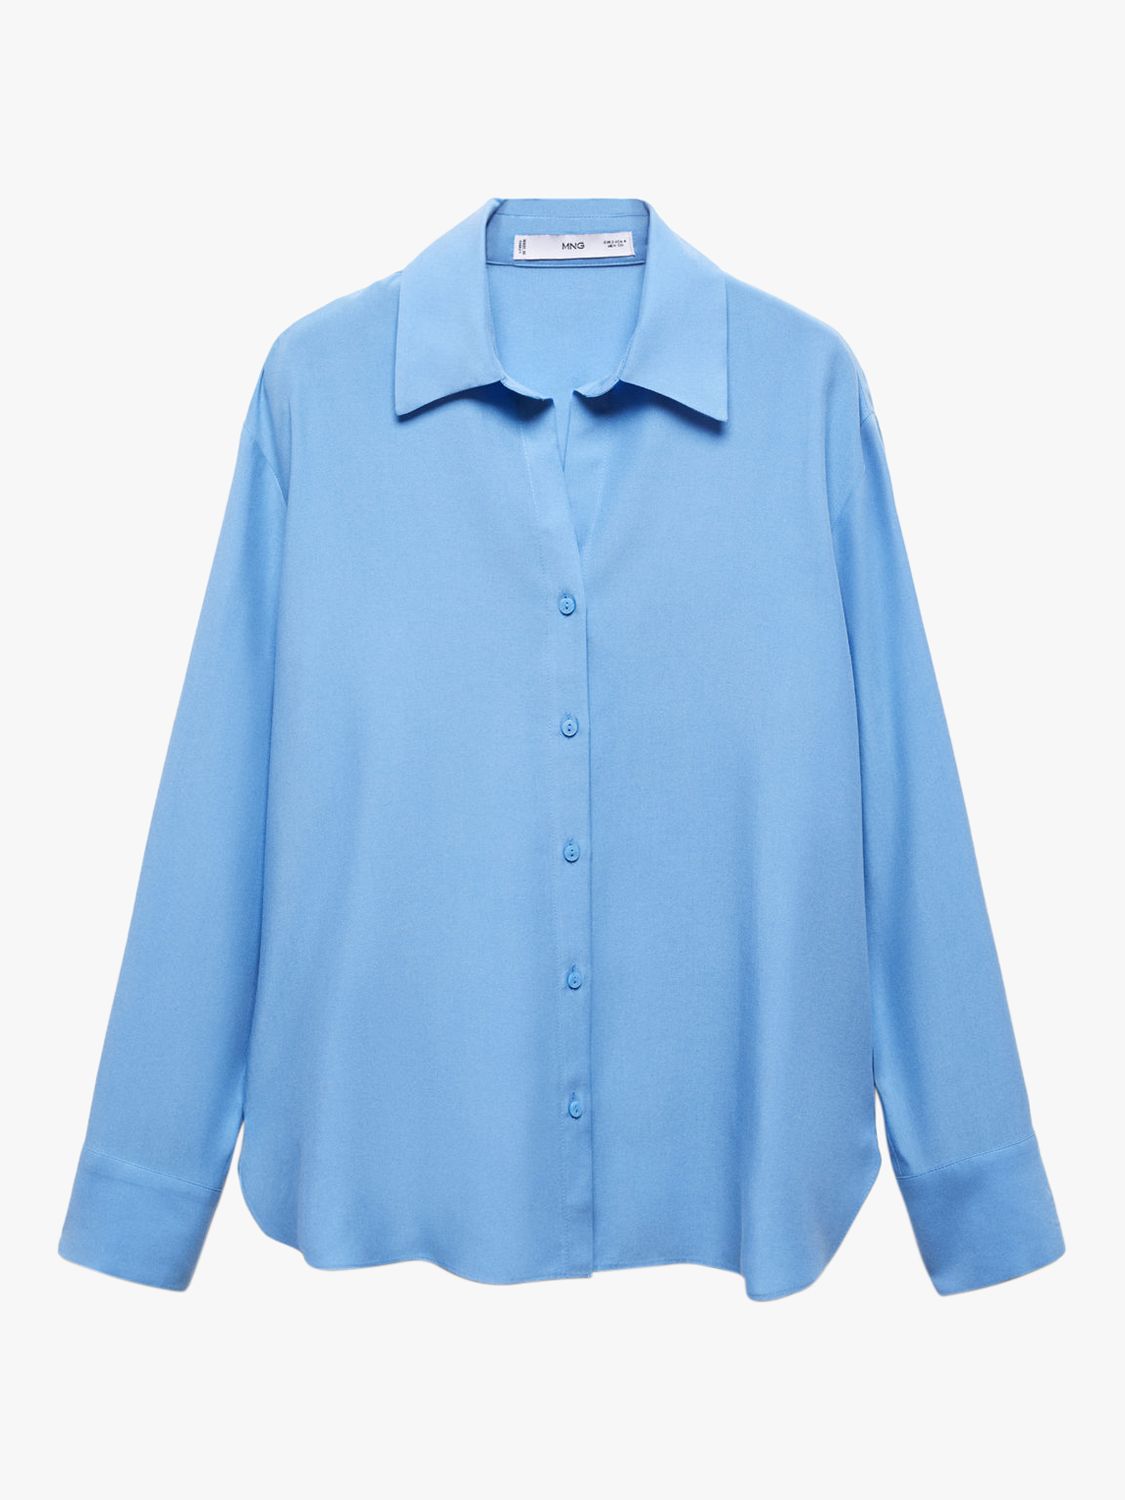 Mango Lima Fluid Shirt, Blue, 16